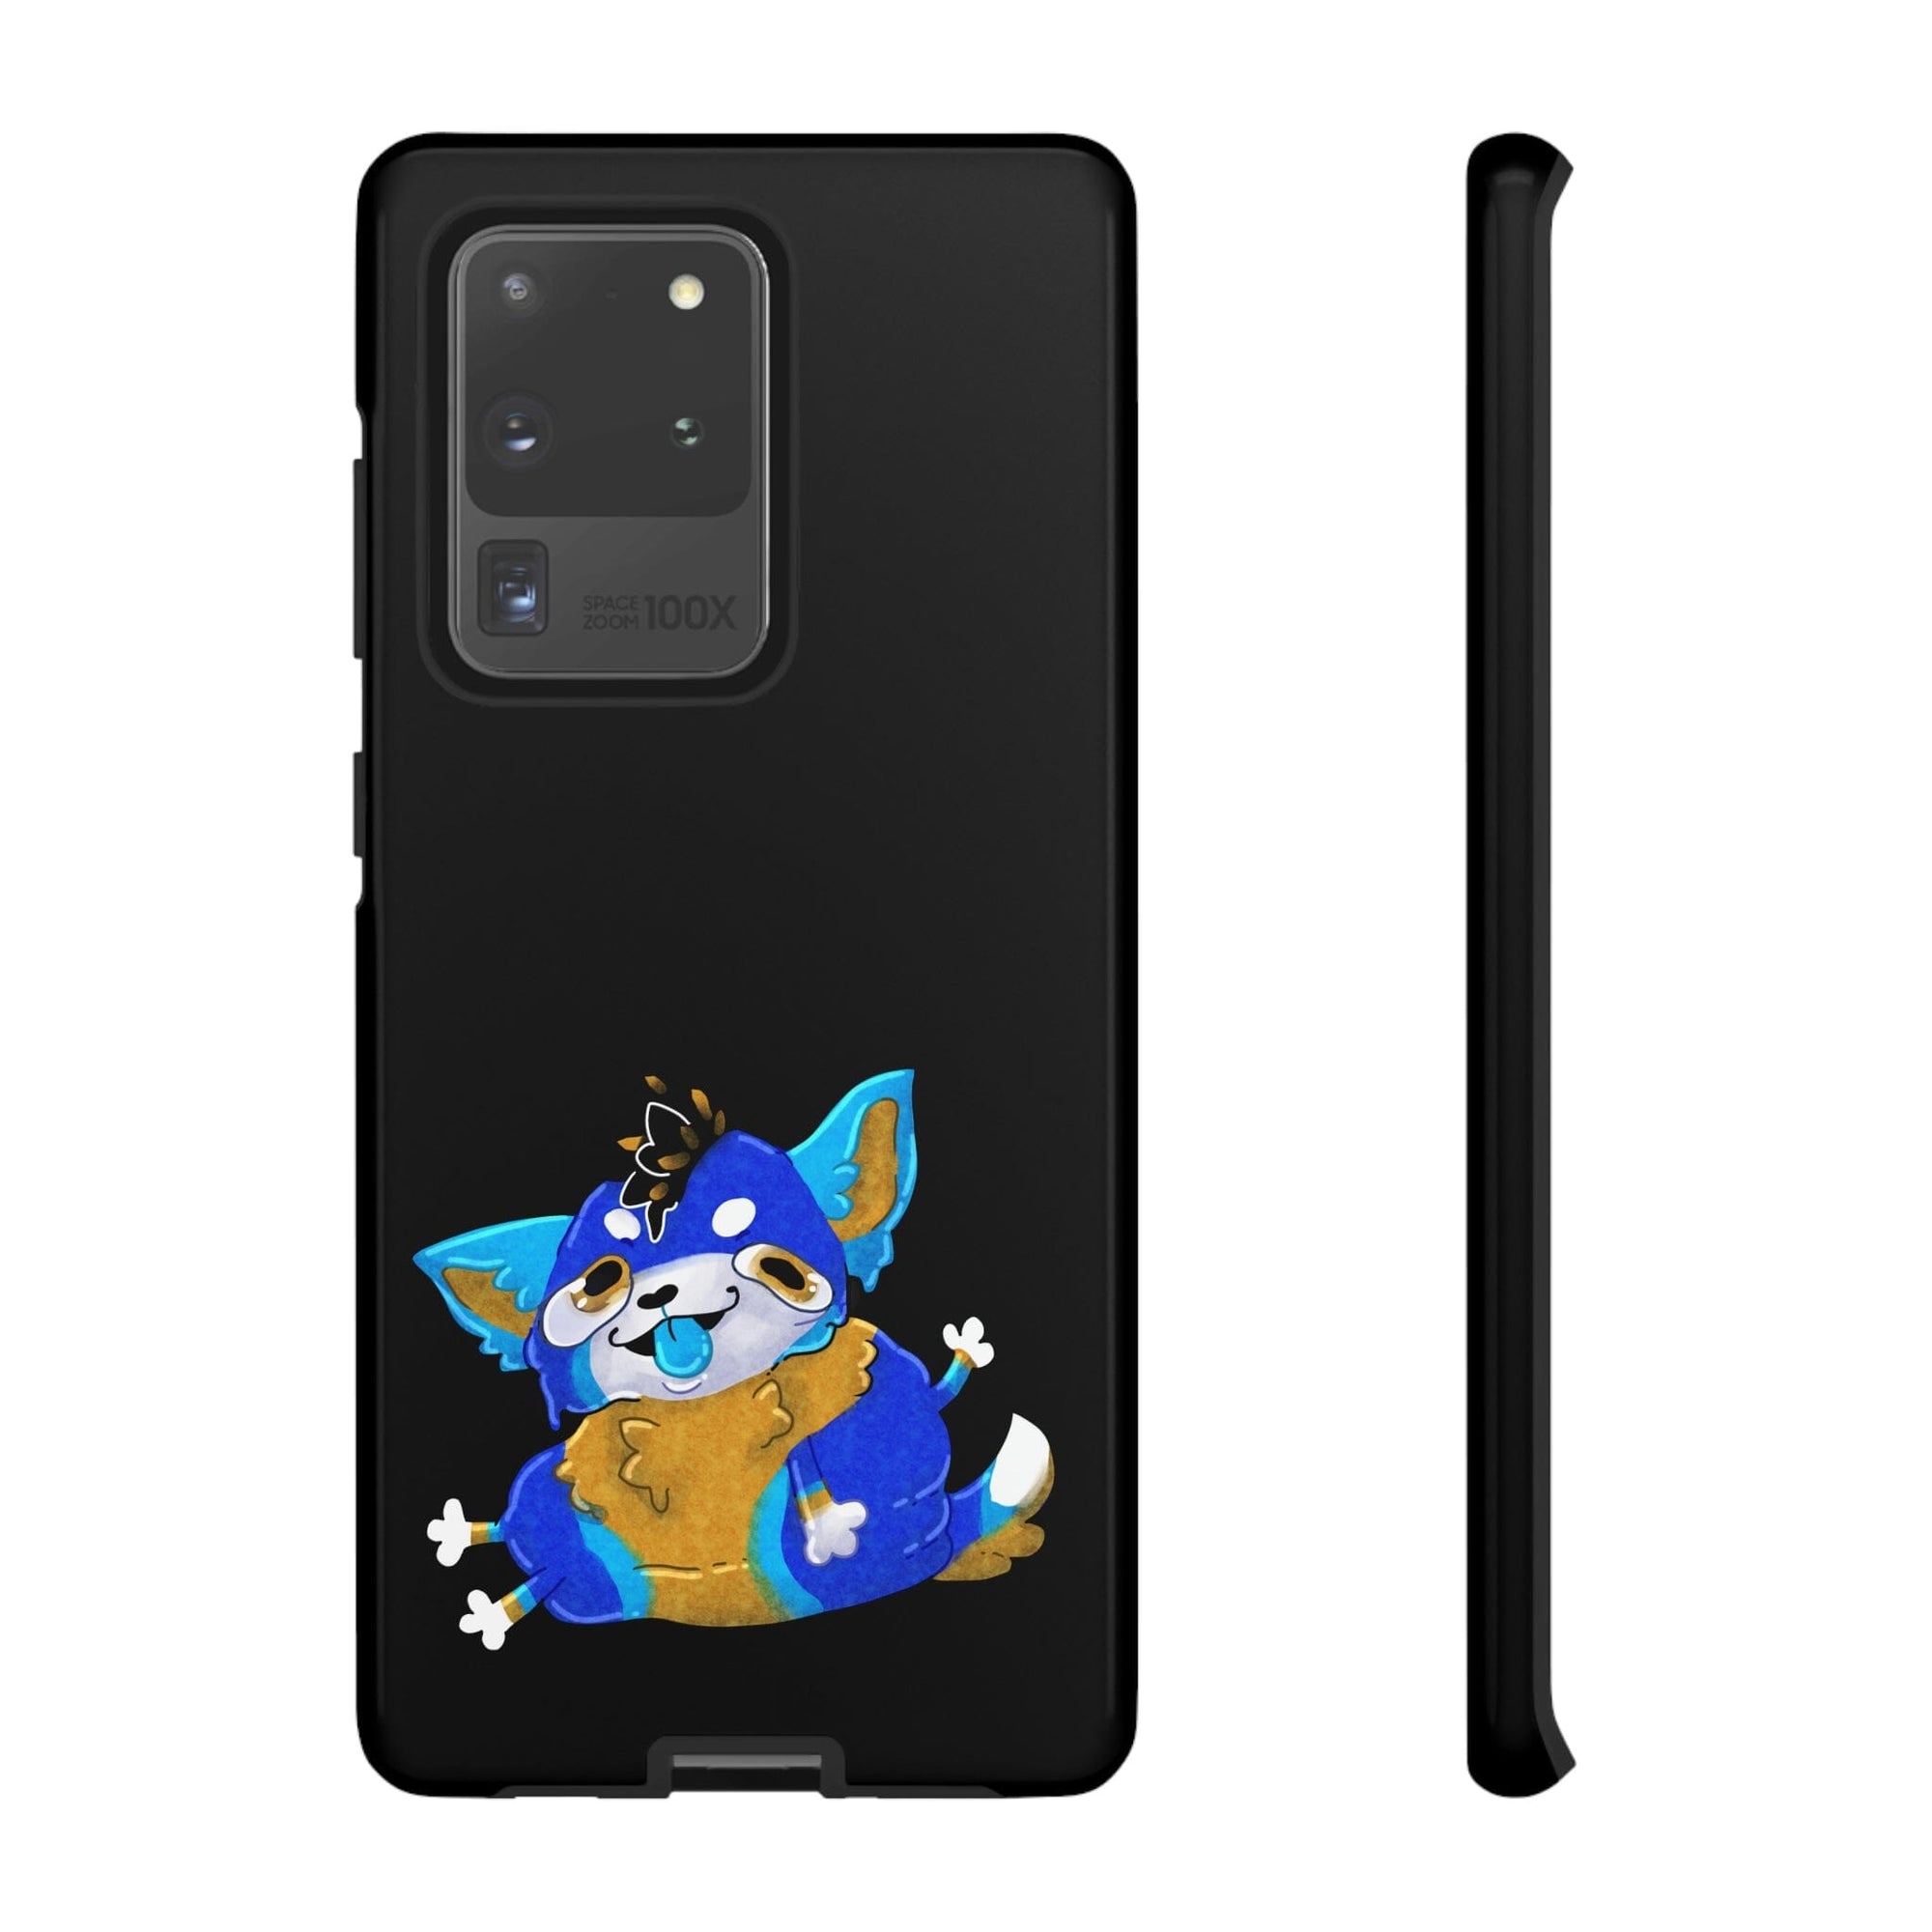 Hund The Hound - Hunderbaked - Phone Case Phone Case Printify Samsung Galaxy S20 Ultra Glossy 